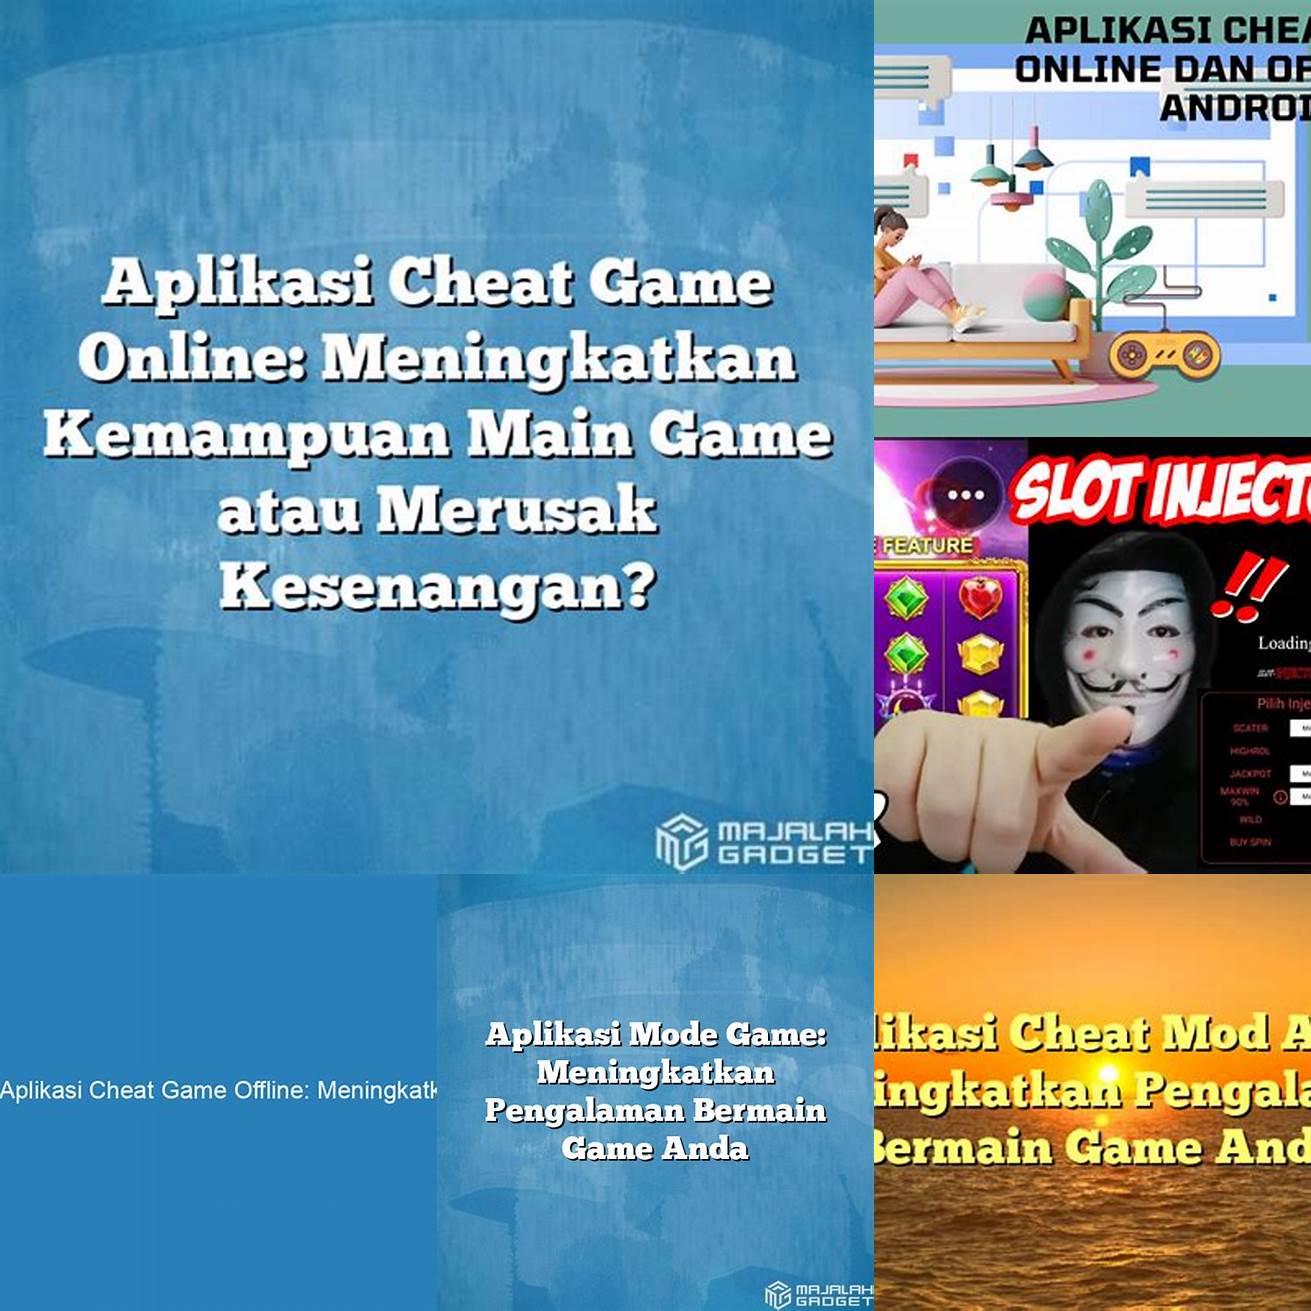 1 Menggunakan apk cheat game online dapat merusak pengalaman bermain fair play